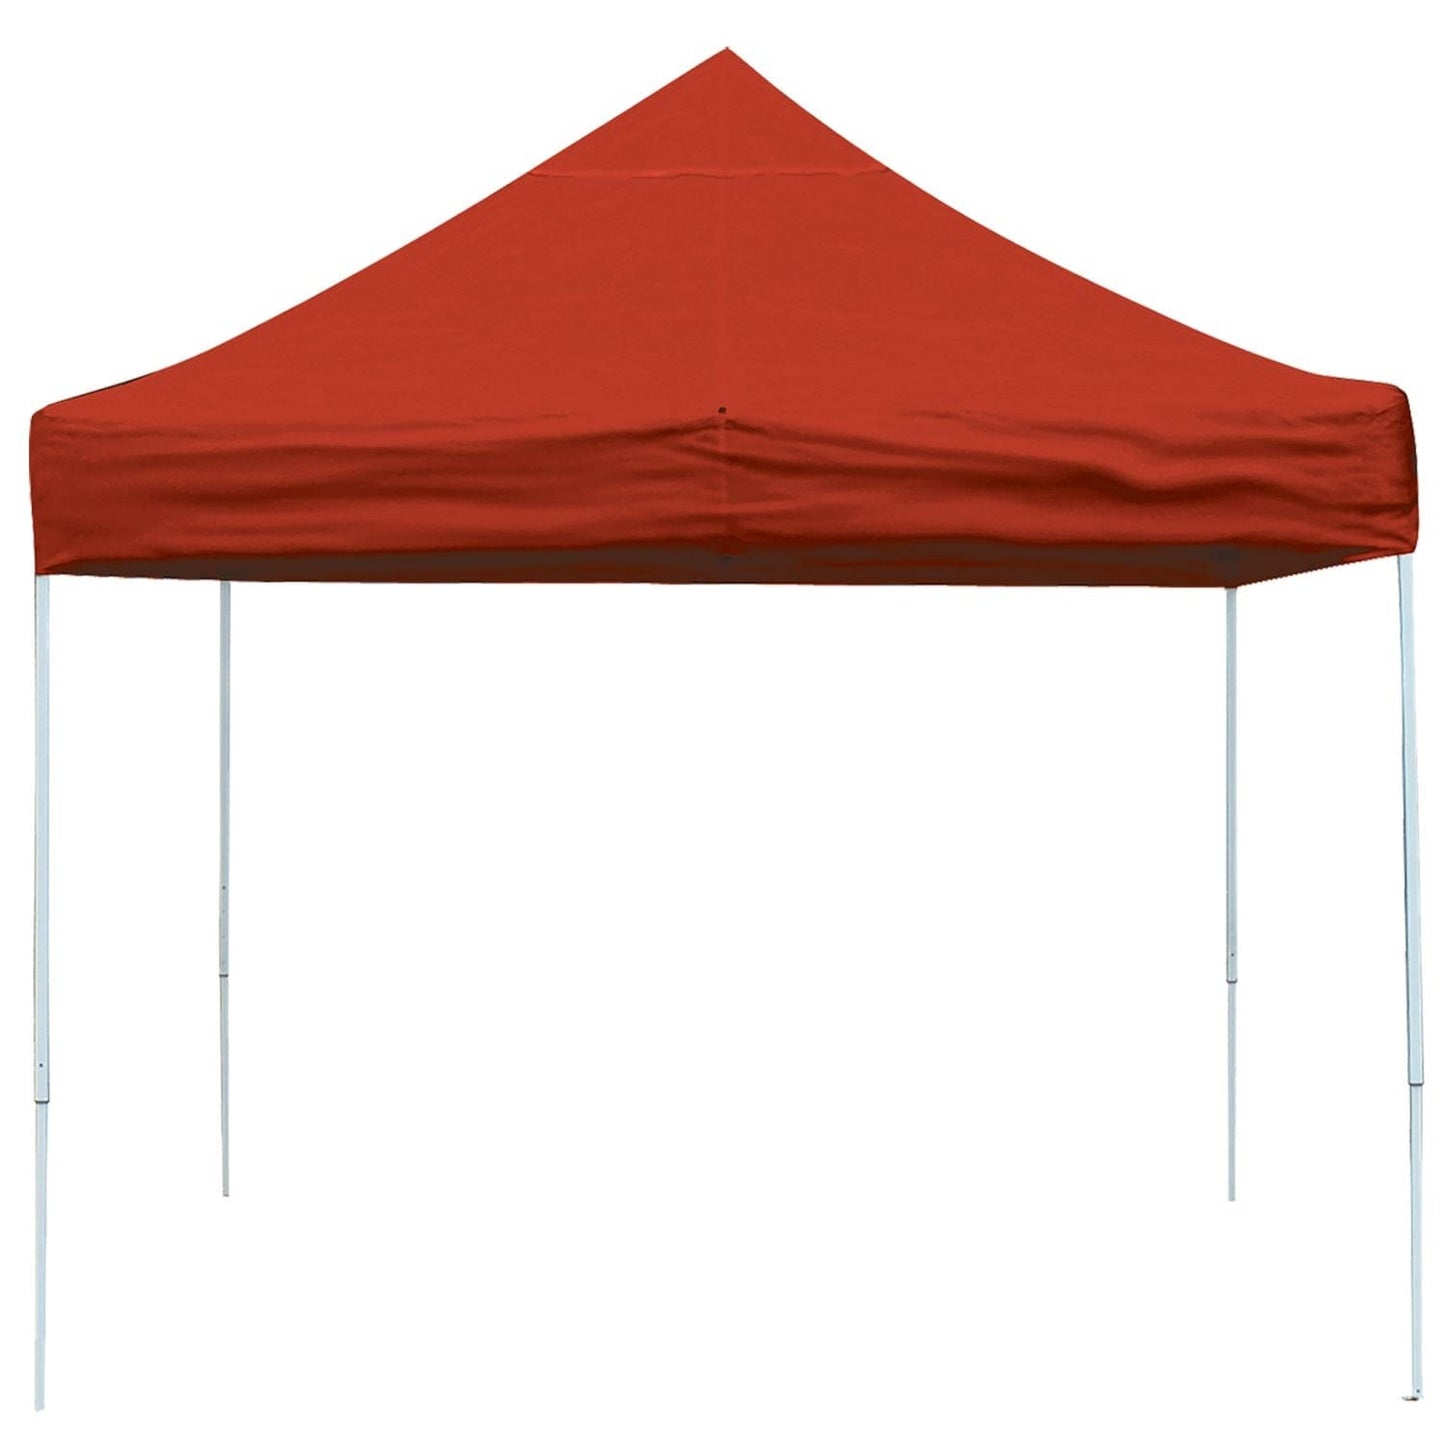 ShelterLogic Pop-Up Canopies ShelterLogic | Pop-Up Canopy HD - Straight Leg 10 x 10 ft. Red 22561